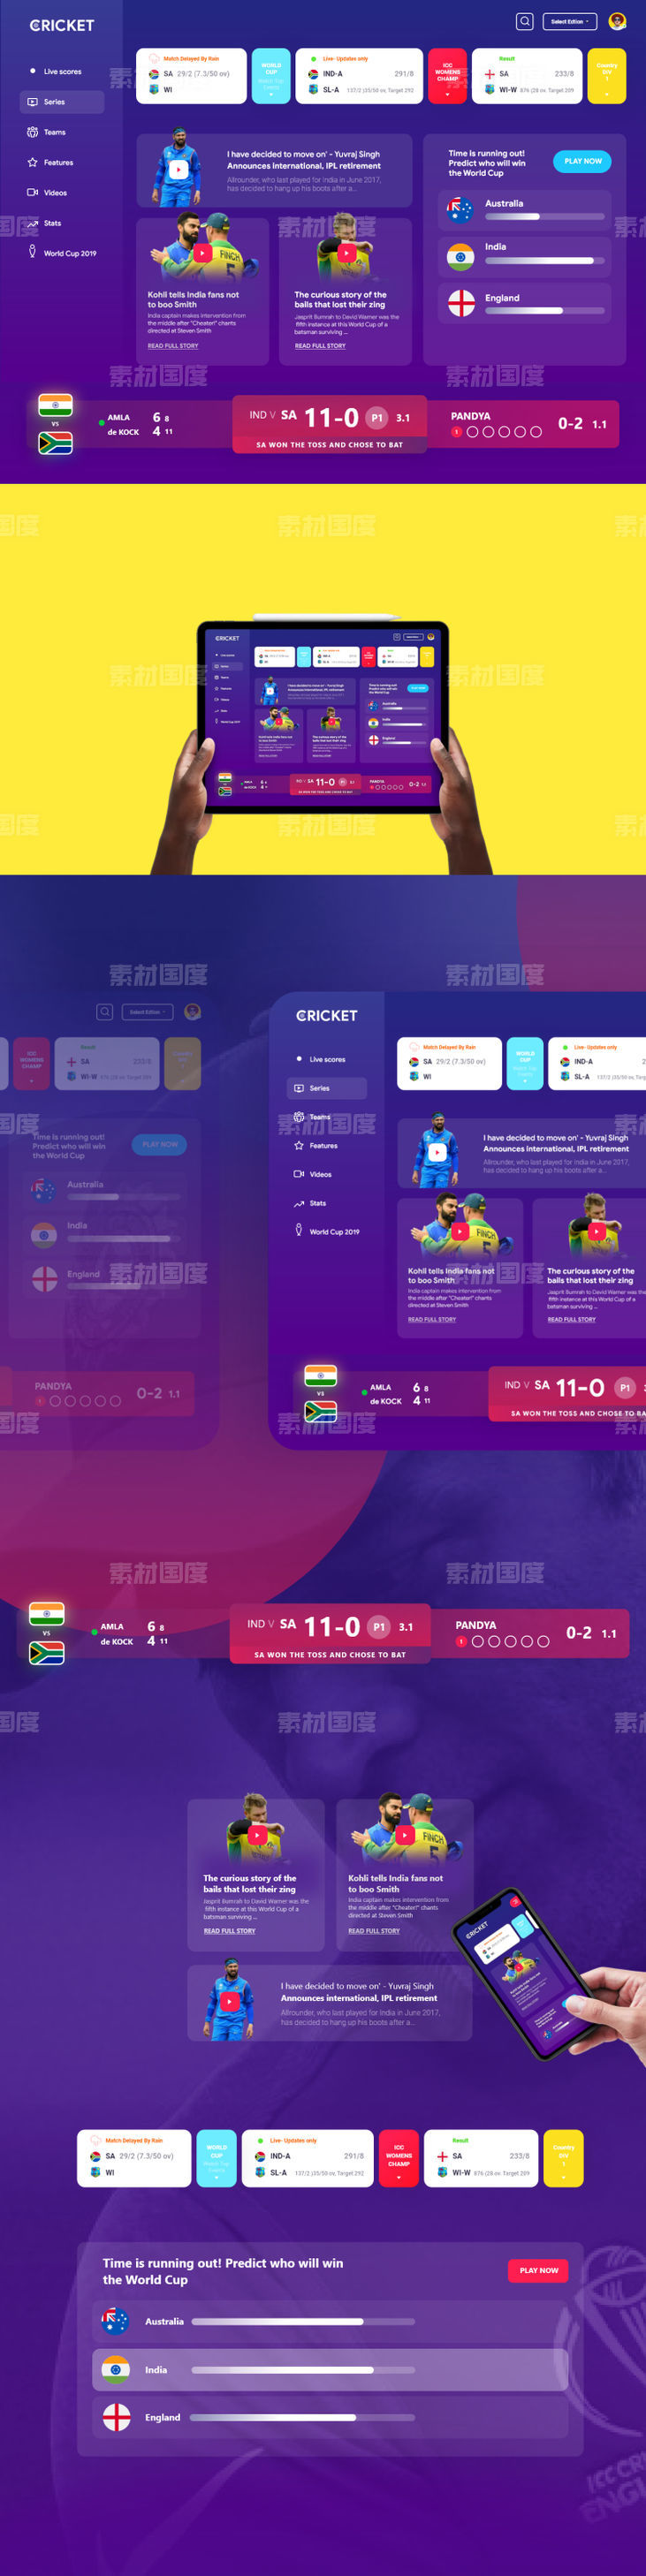 ICC Cricket World Cup 体育赛事app ui .xd素材下载